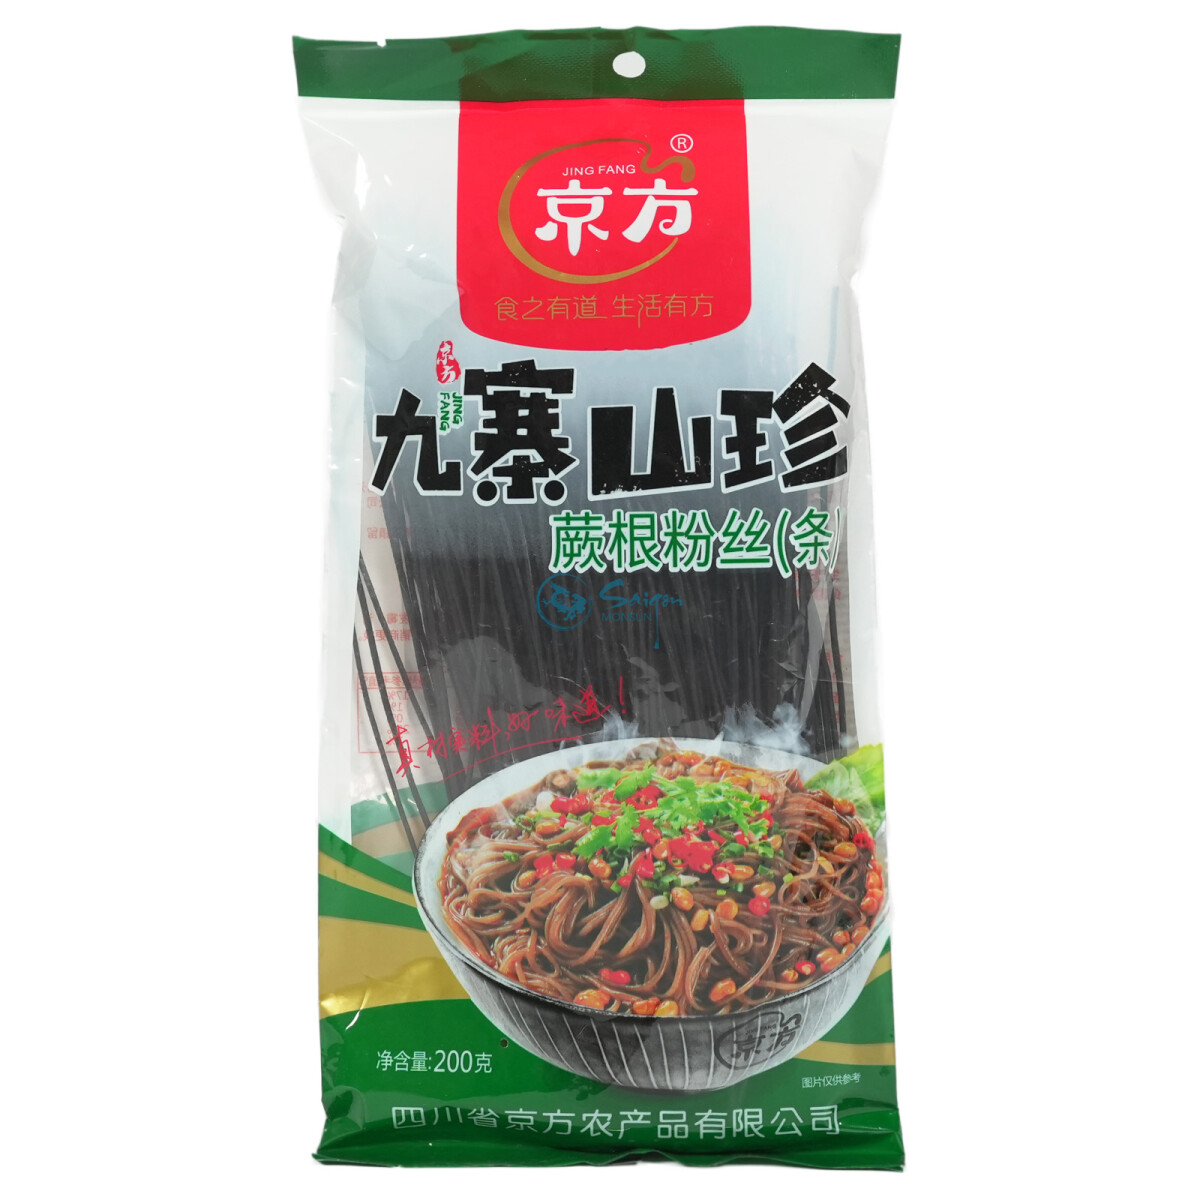 Jing Fang Fern Root Noodles Jue Gen Miantiao 200g